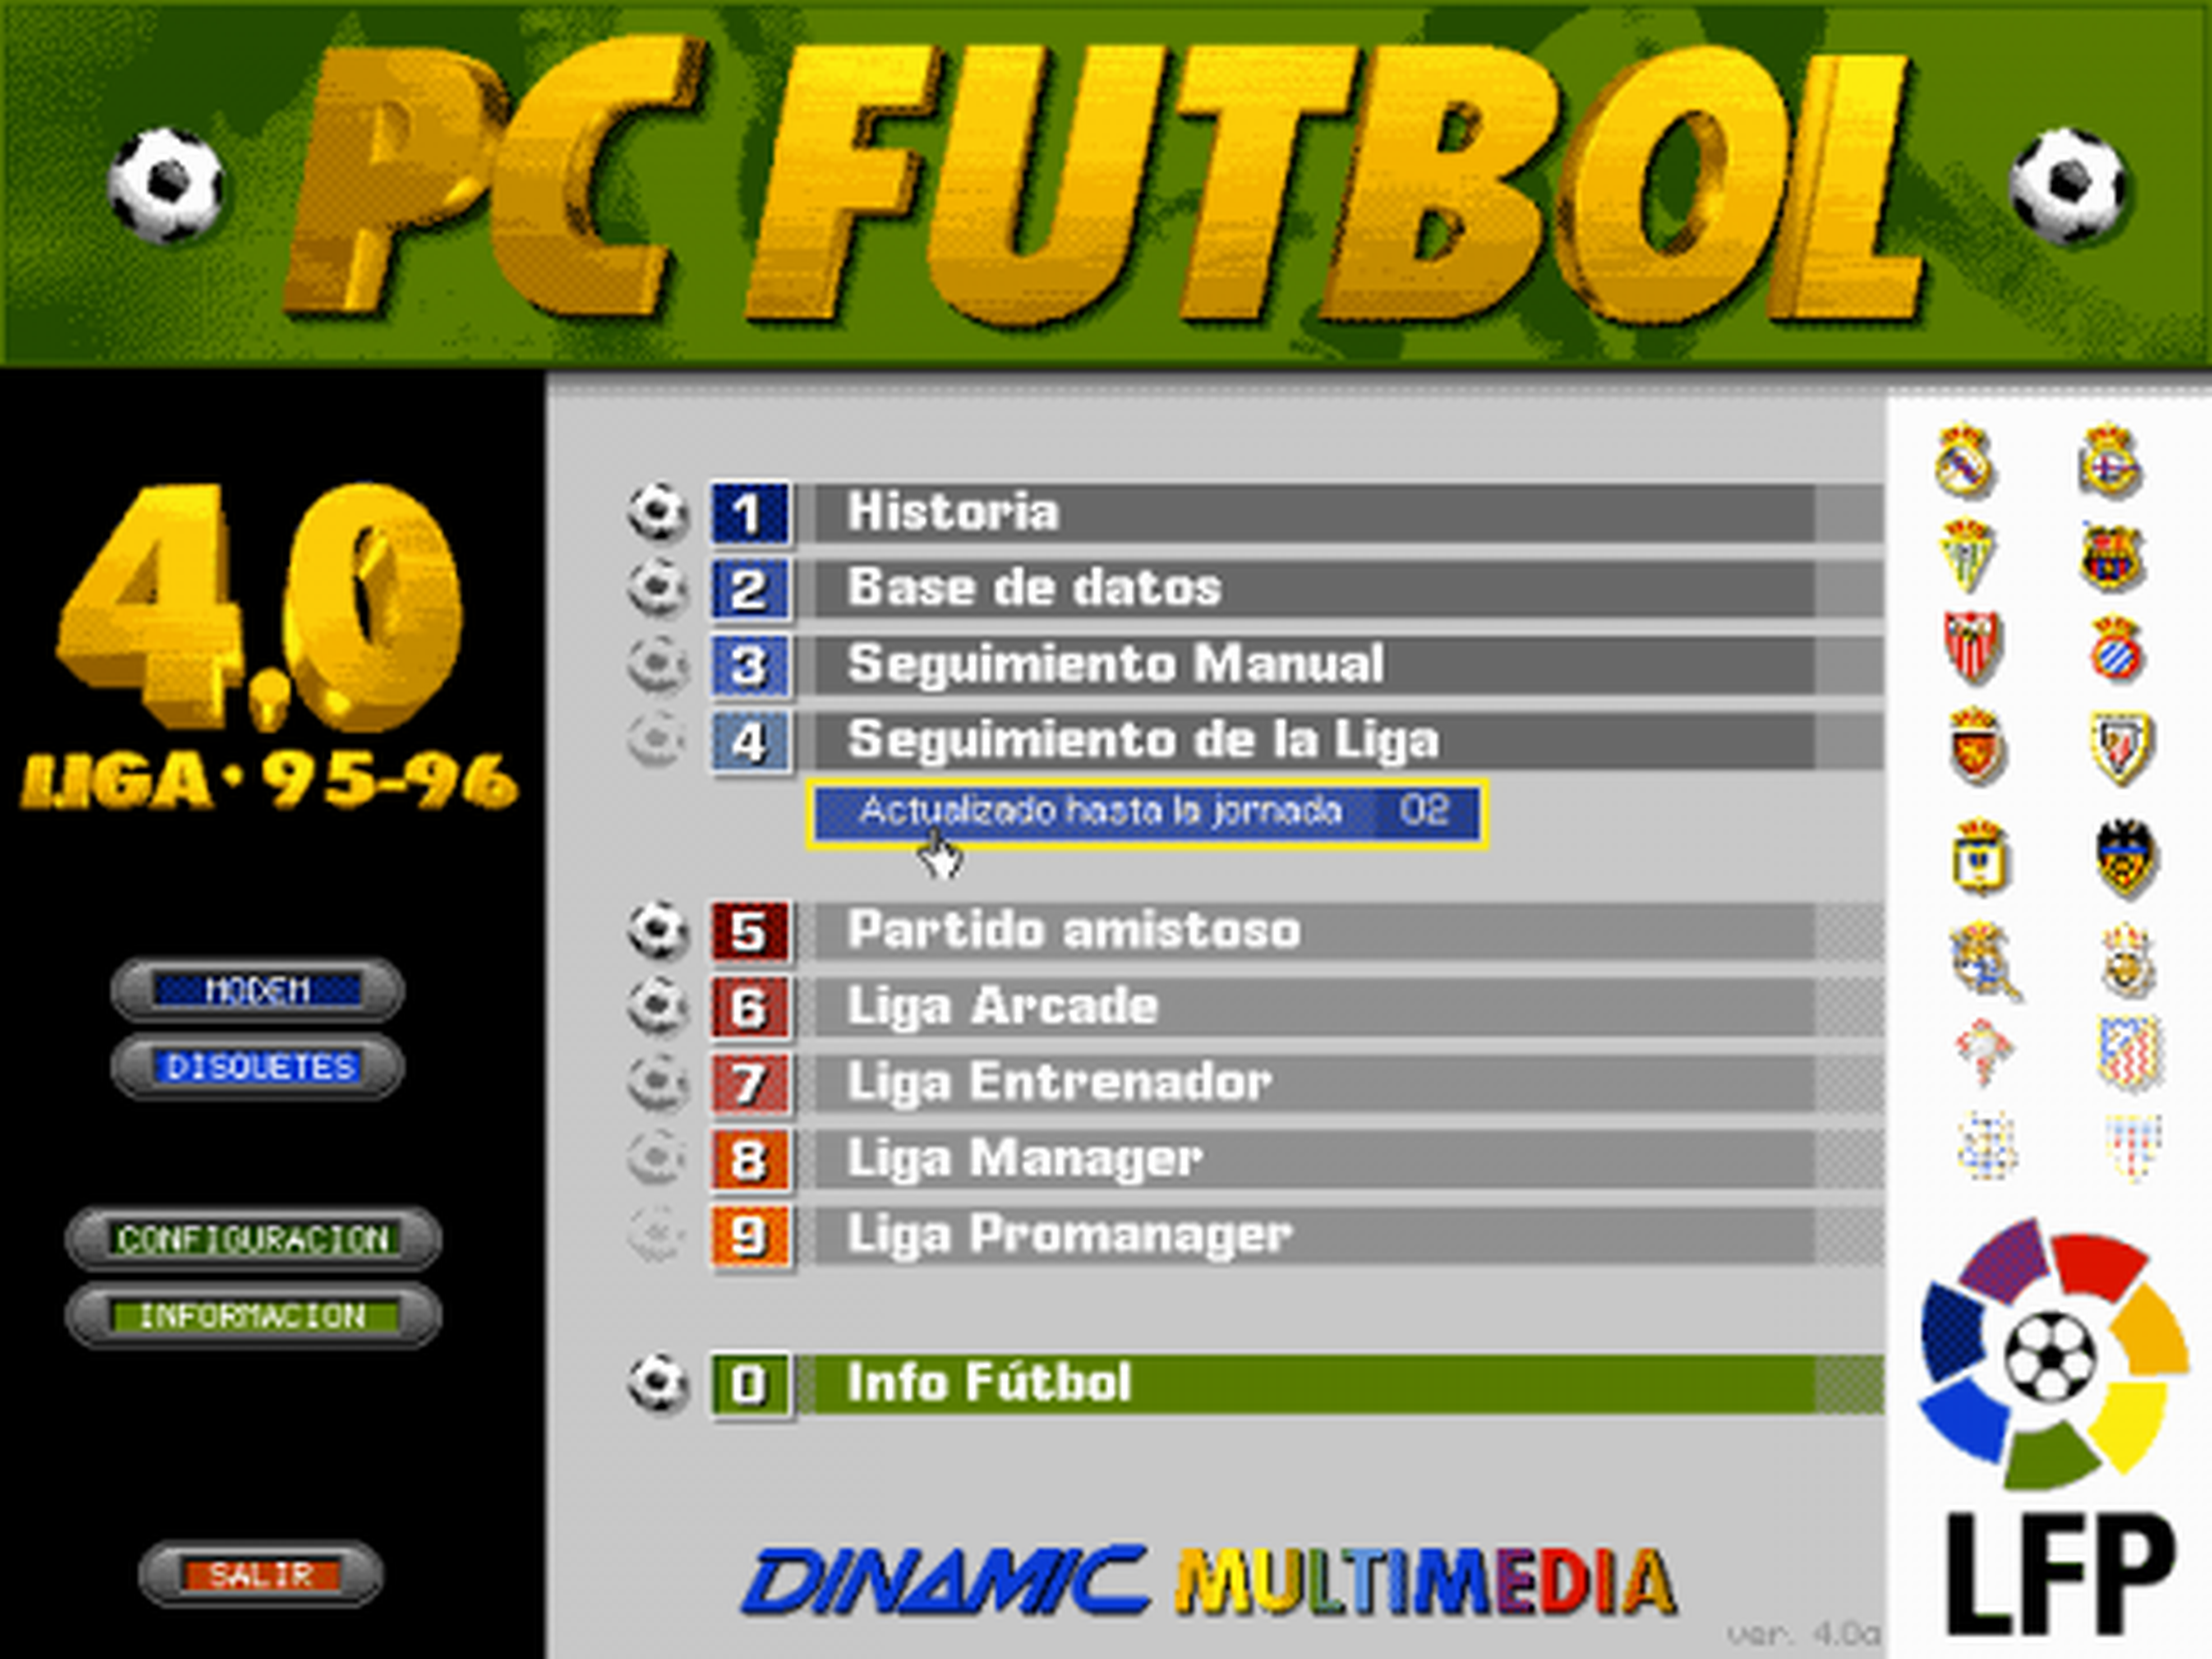 Se confirma FX Fútbol, el 'sucesor espiritual' de PC Fútbol